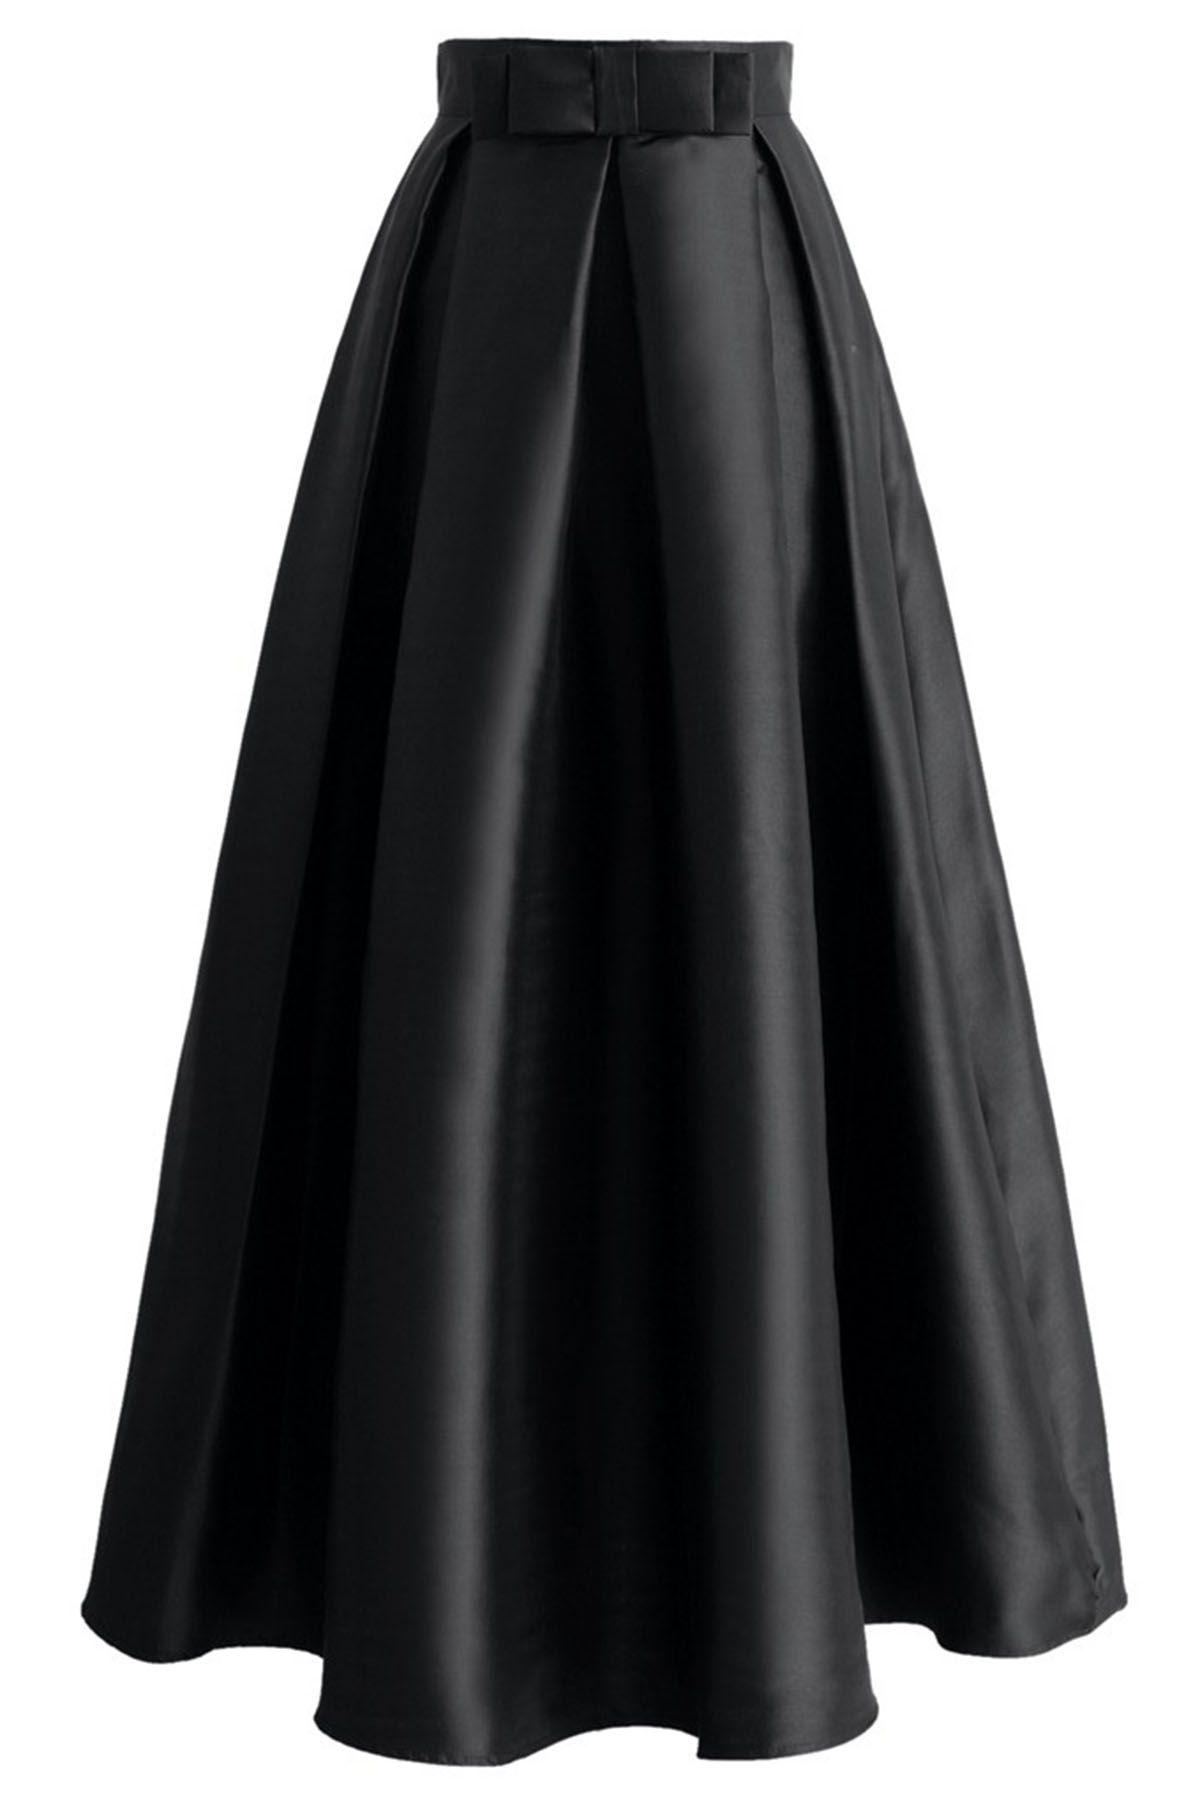 Black Satin Prom Skirt, Tutu Skirts, Party Dress, 2017 Spring Dress on ...